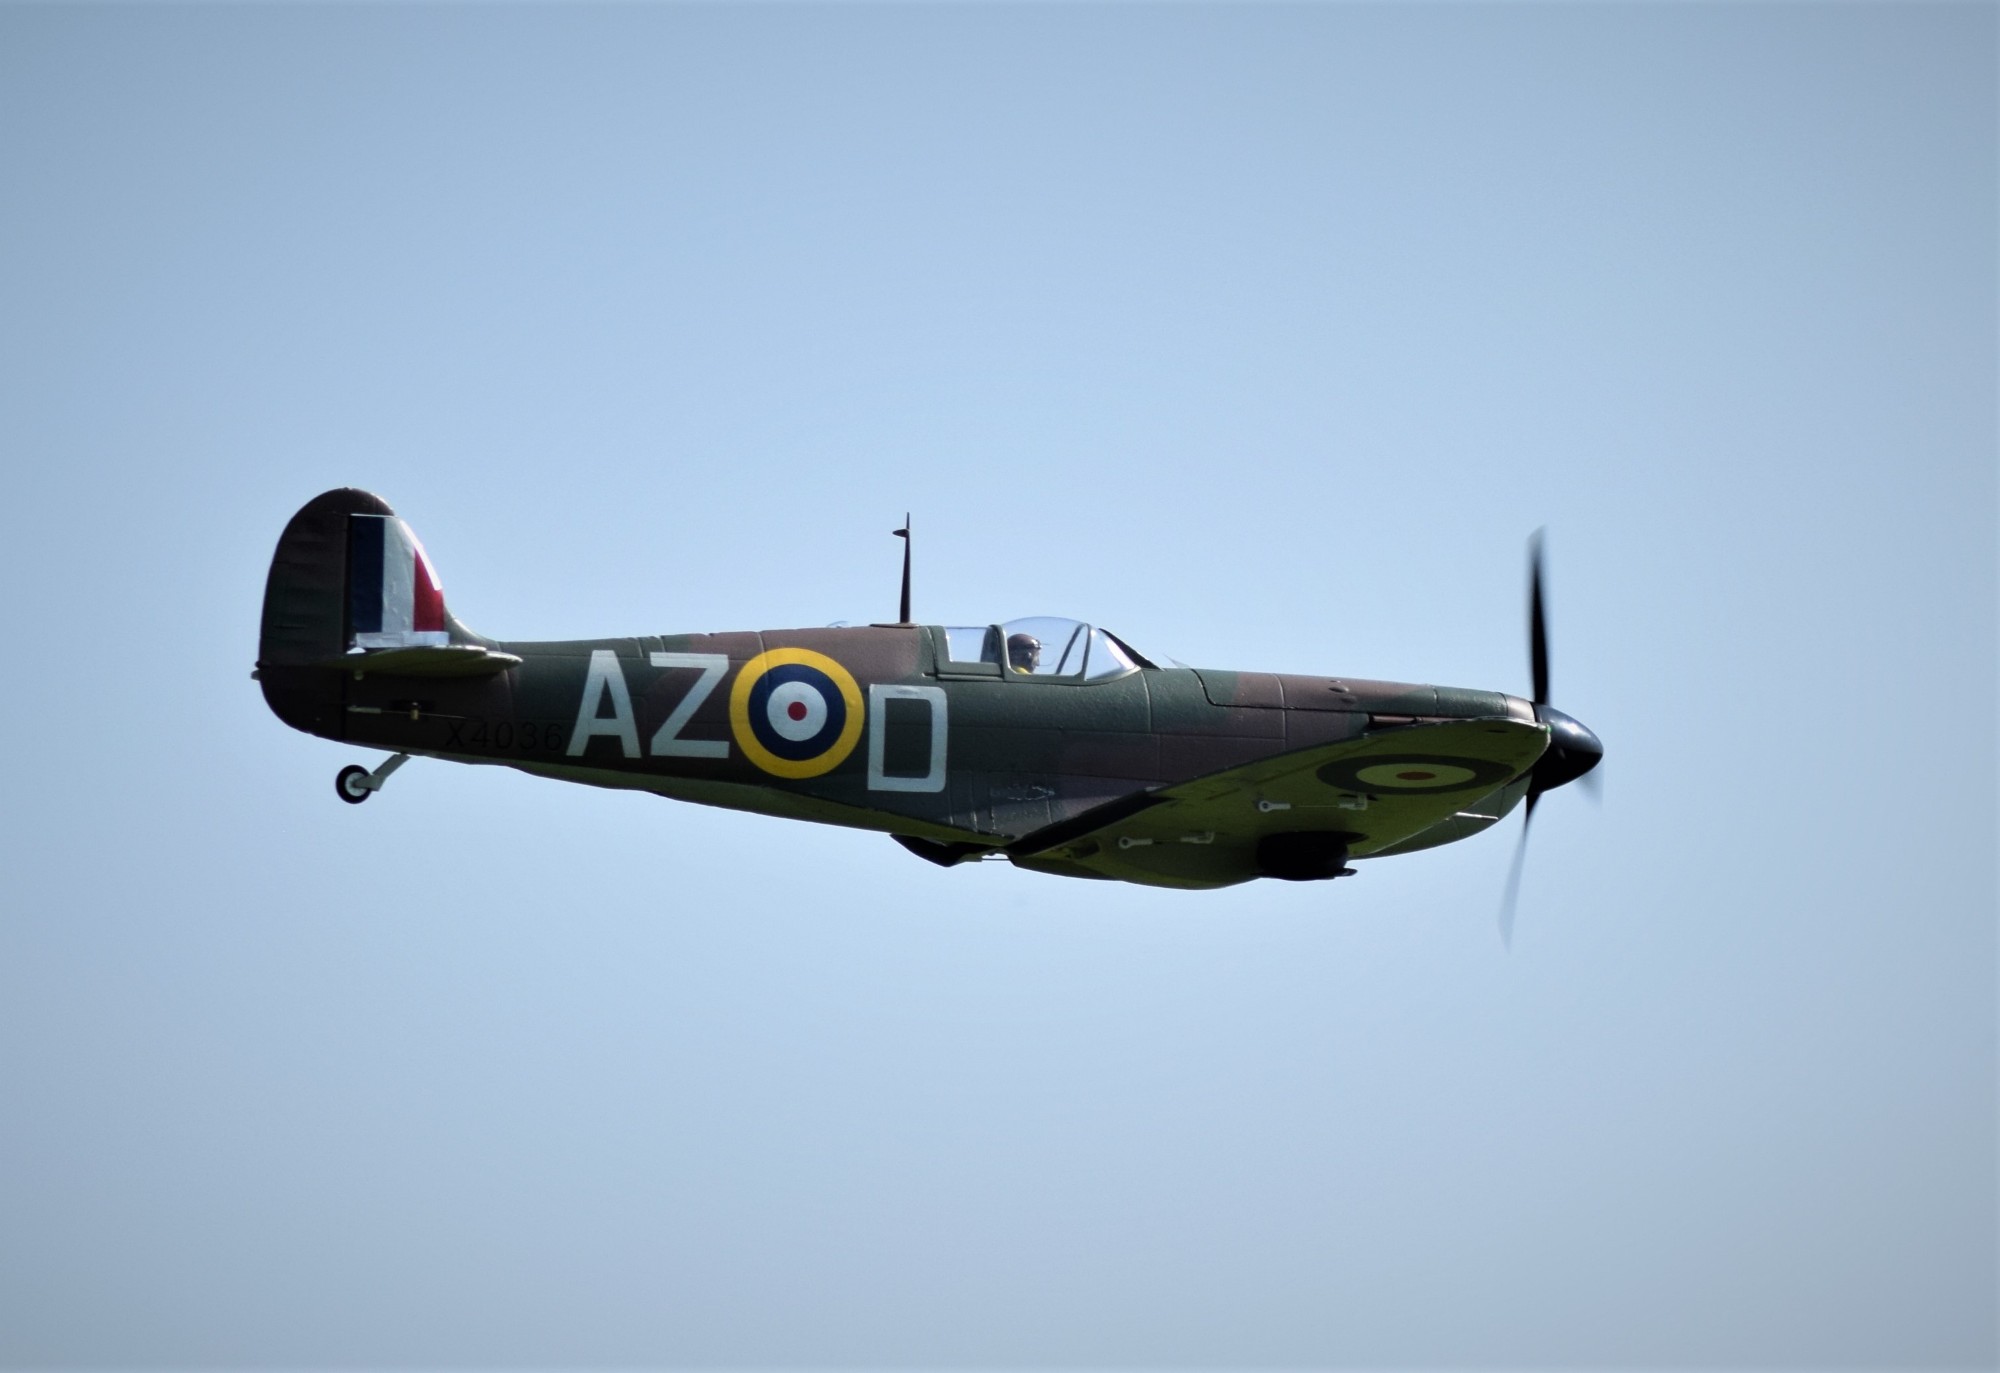 Spitfire MK IX